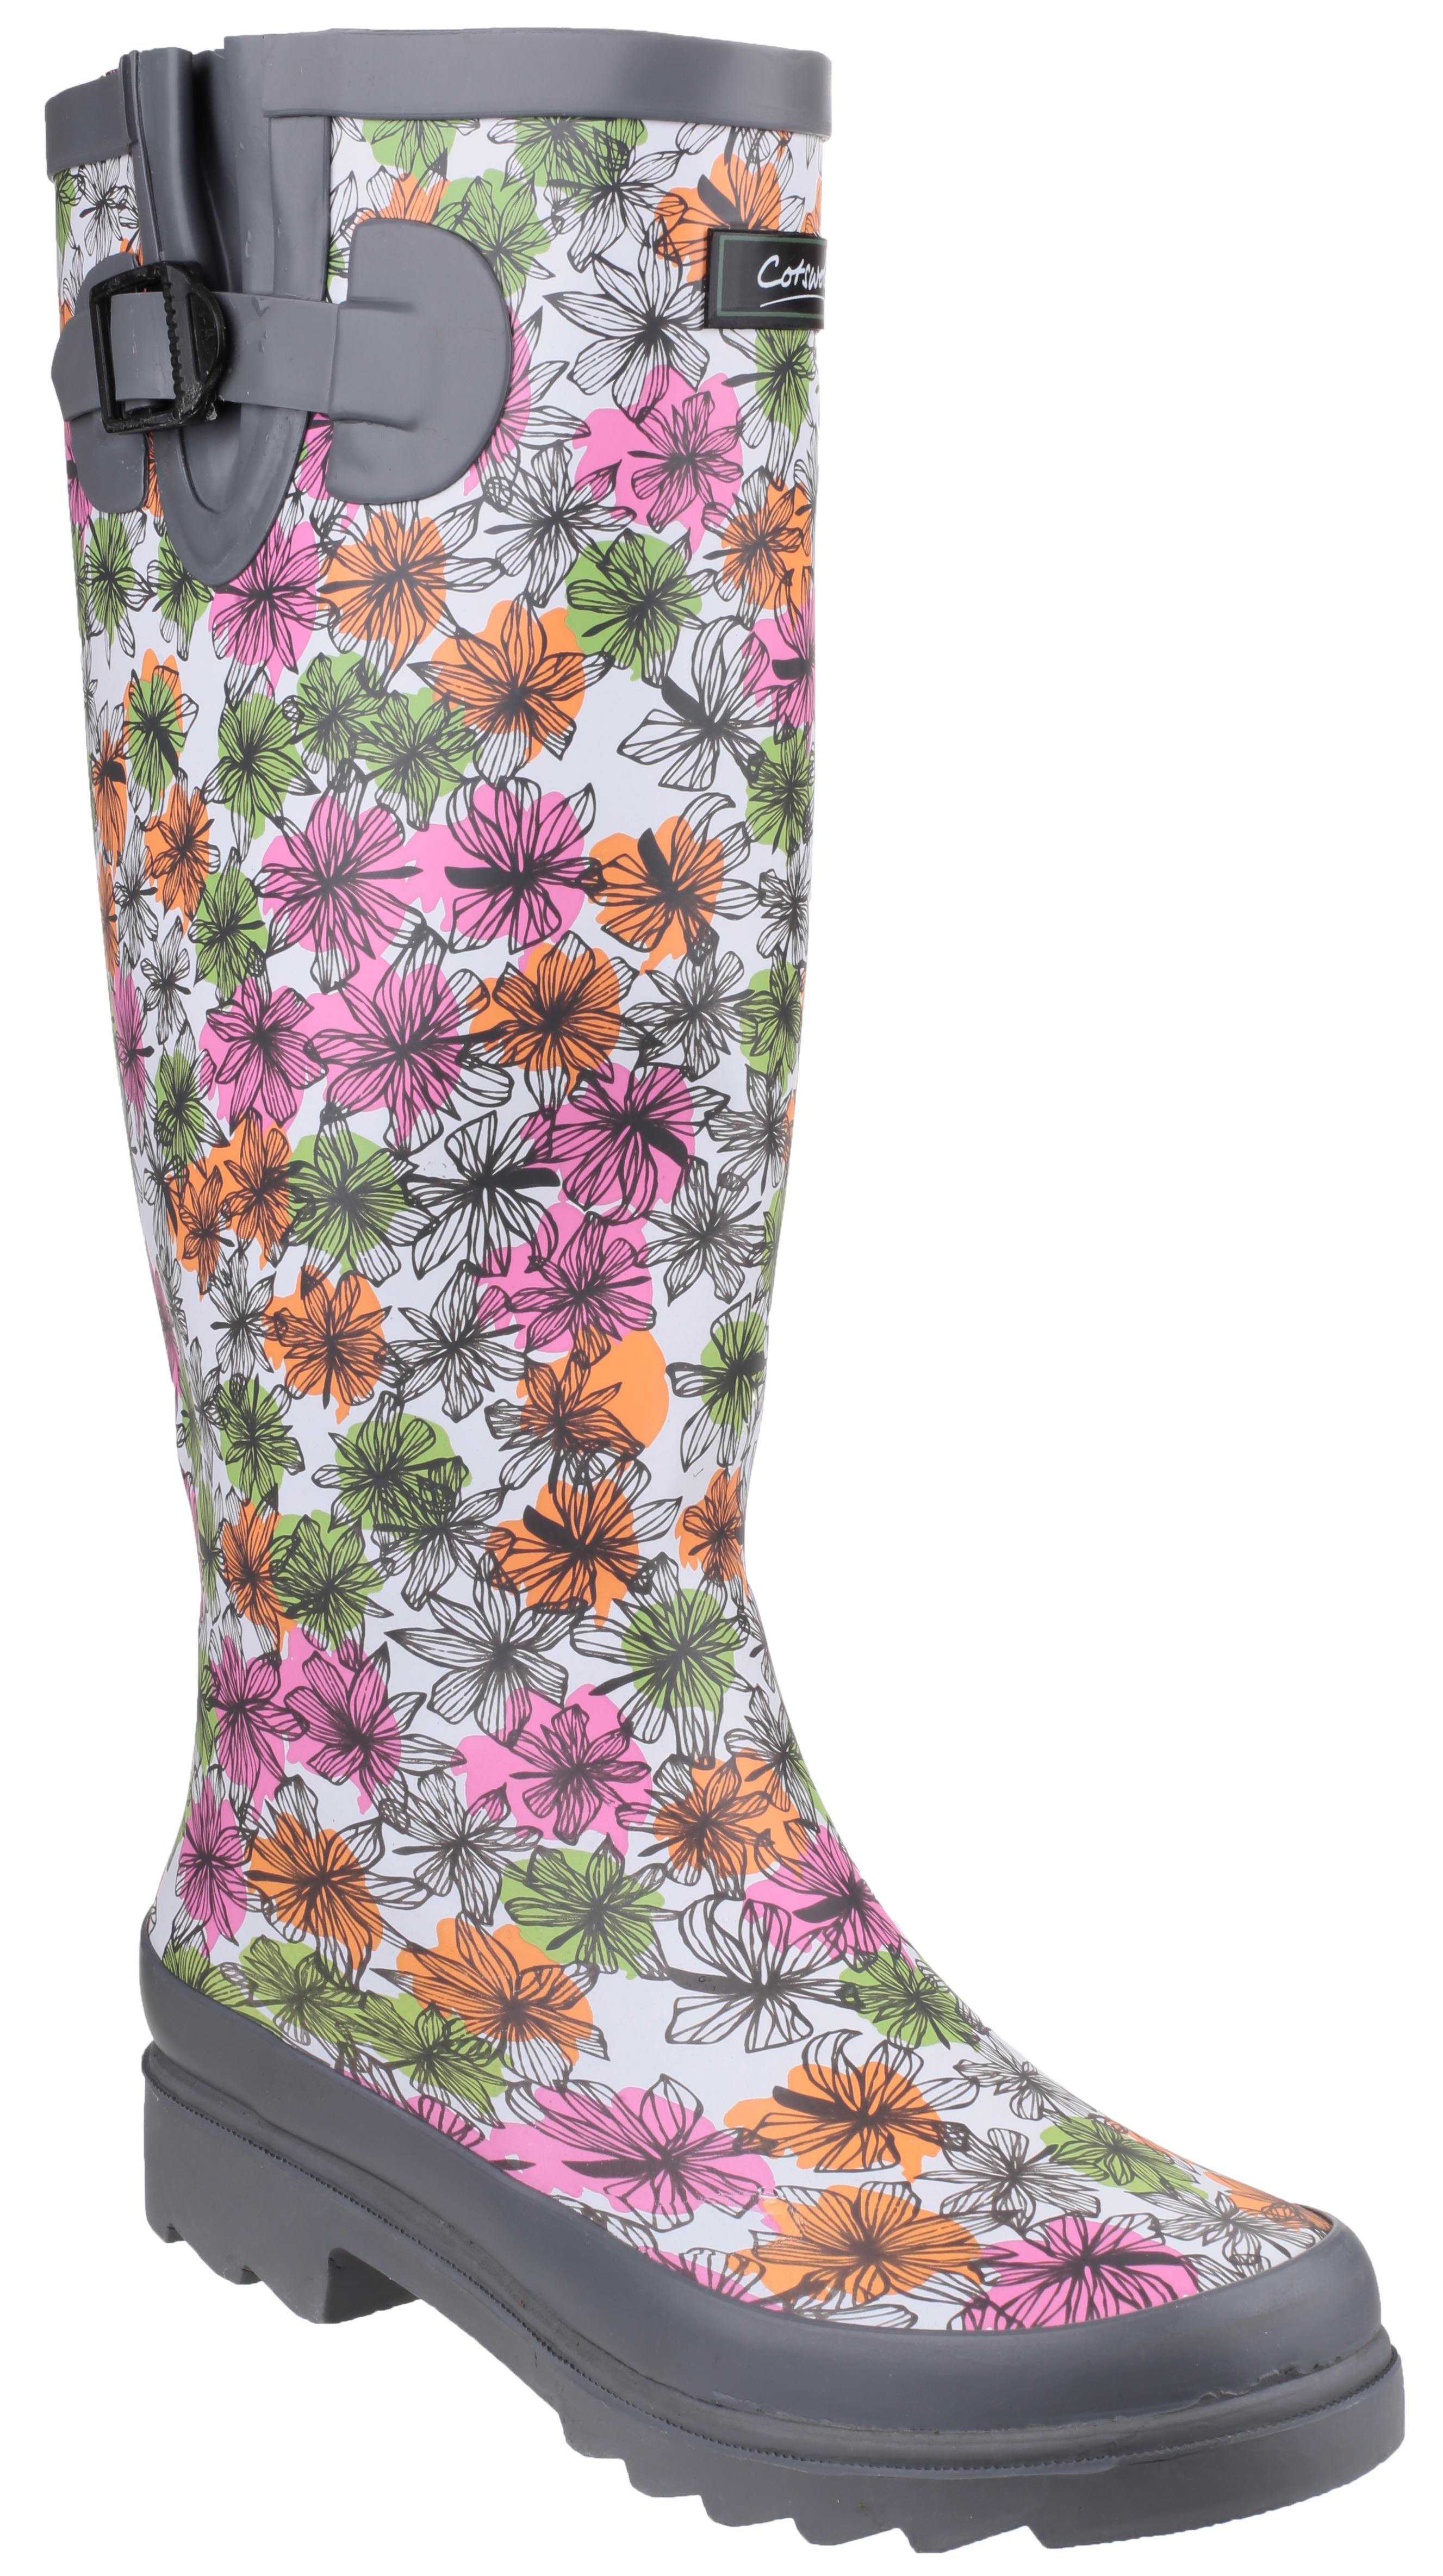 Promotional Flower Power Wellington boots